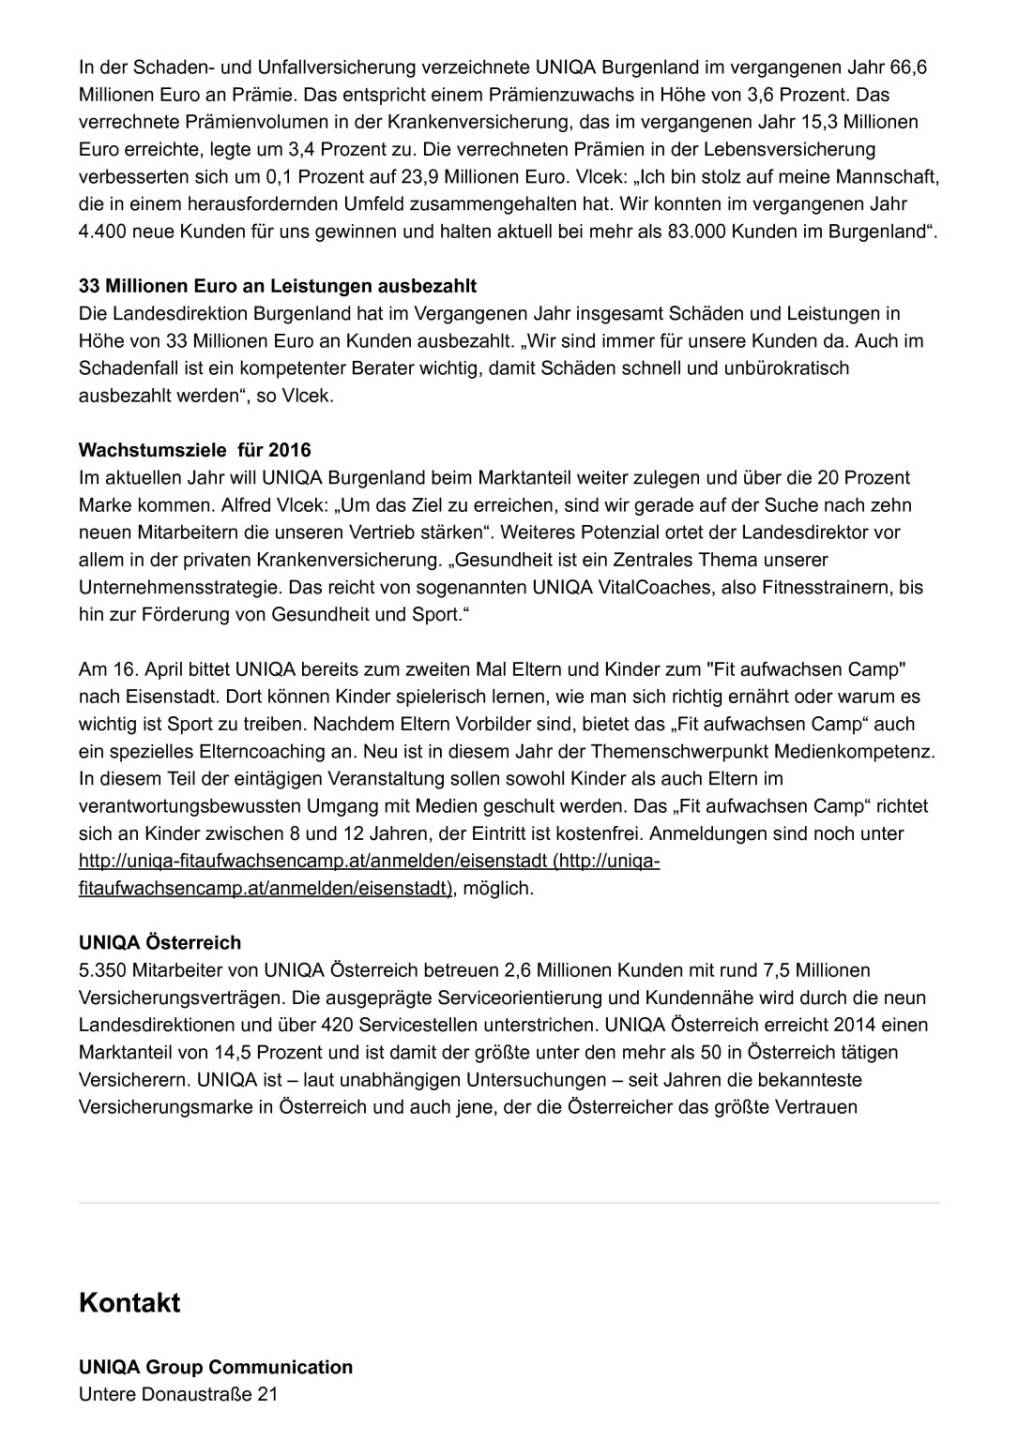 Uniqa Burgenland an der Spitze, Seite 2/3, komplettes Dokument unter http://boerse-social.com/static/uploads/file_857_uniqa_burgenland_an_der_spitze.pdf